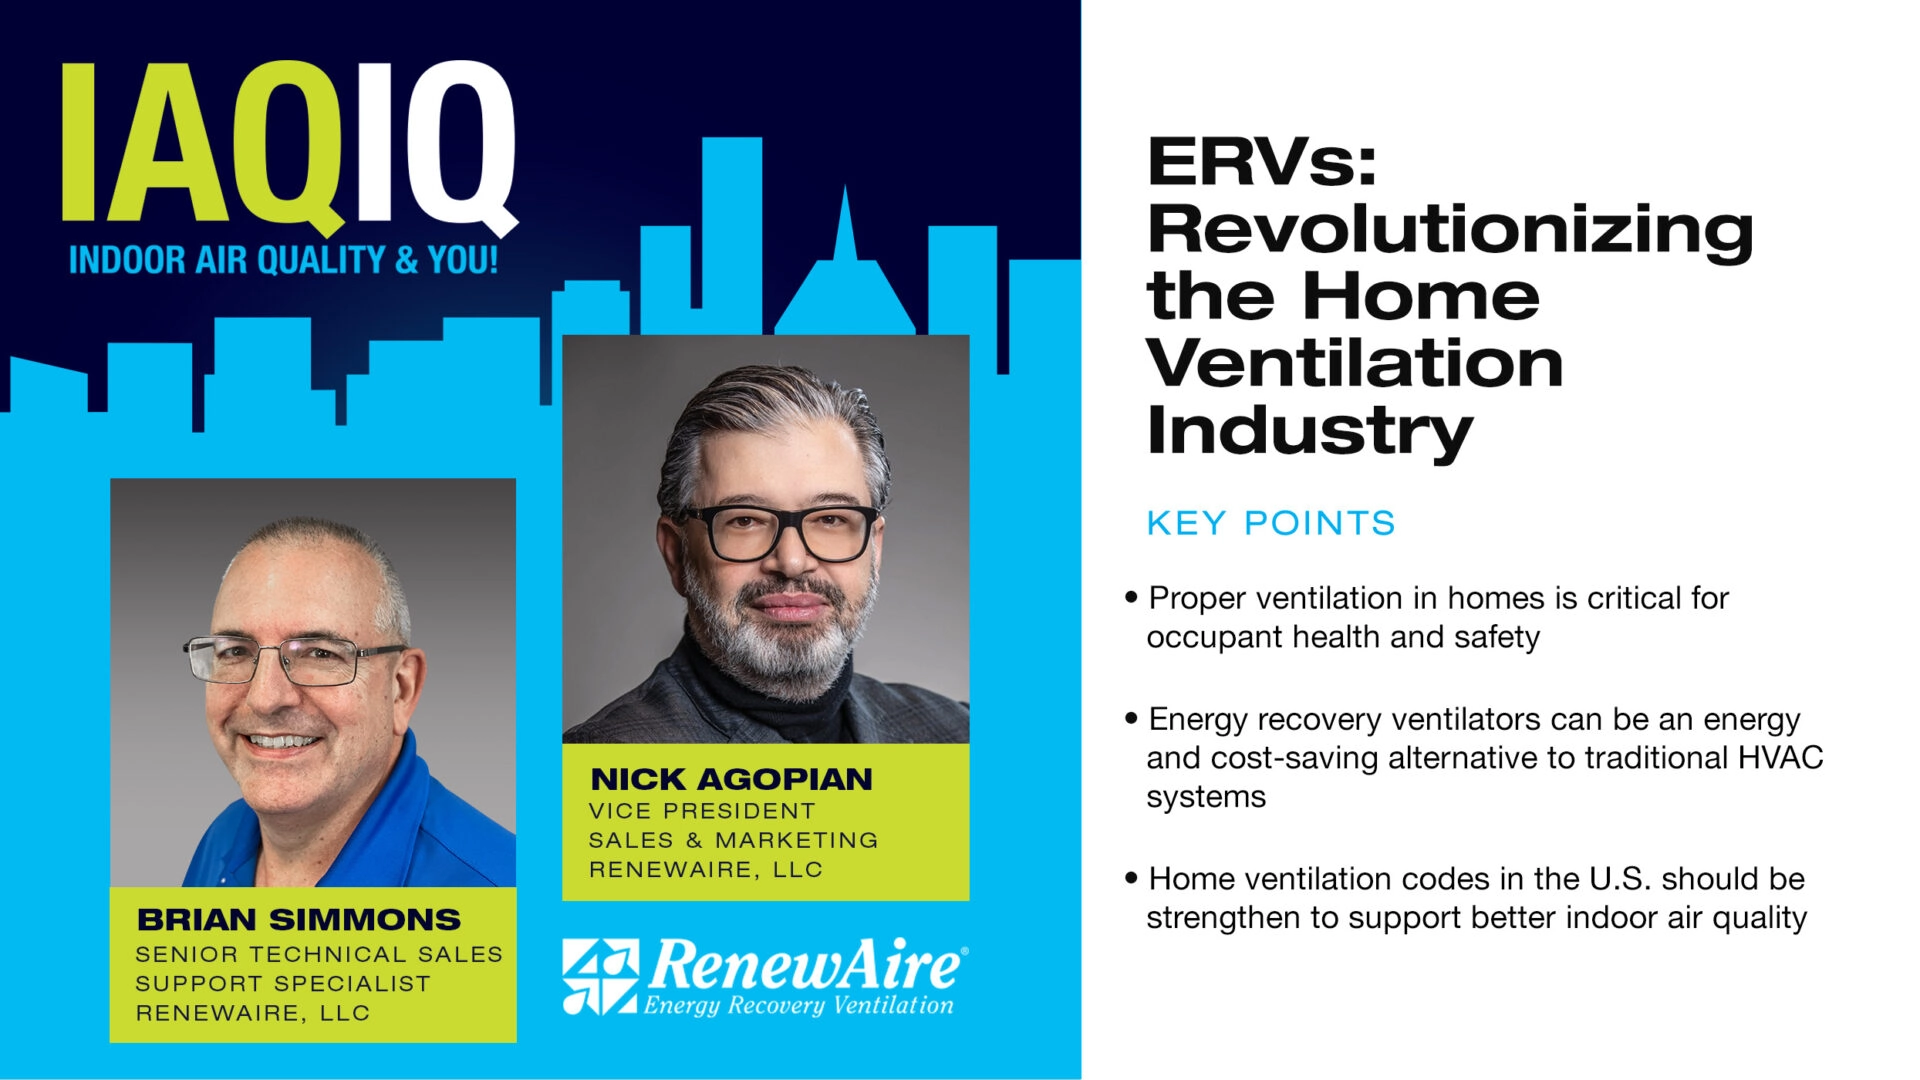 ERVs: Revolutionizing the Home Ventilation Industry